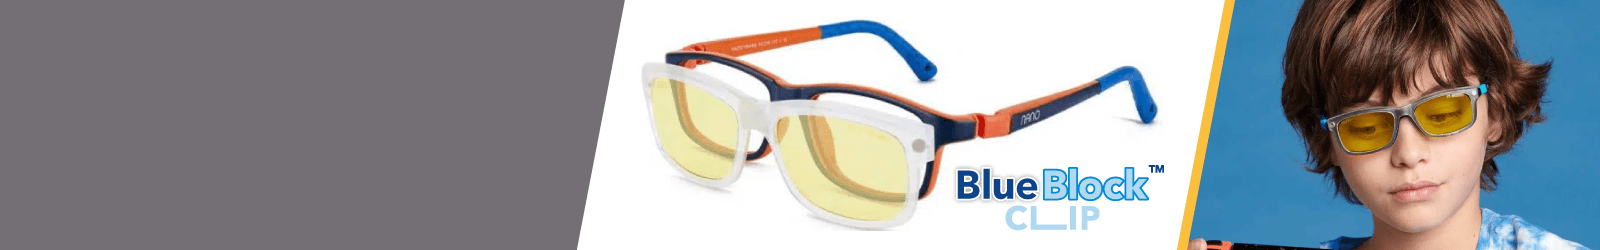 Gold Nano Blue Block Clip Eyewear for Kids